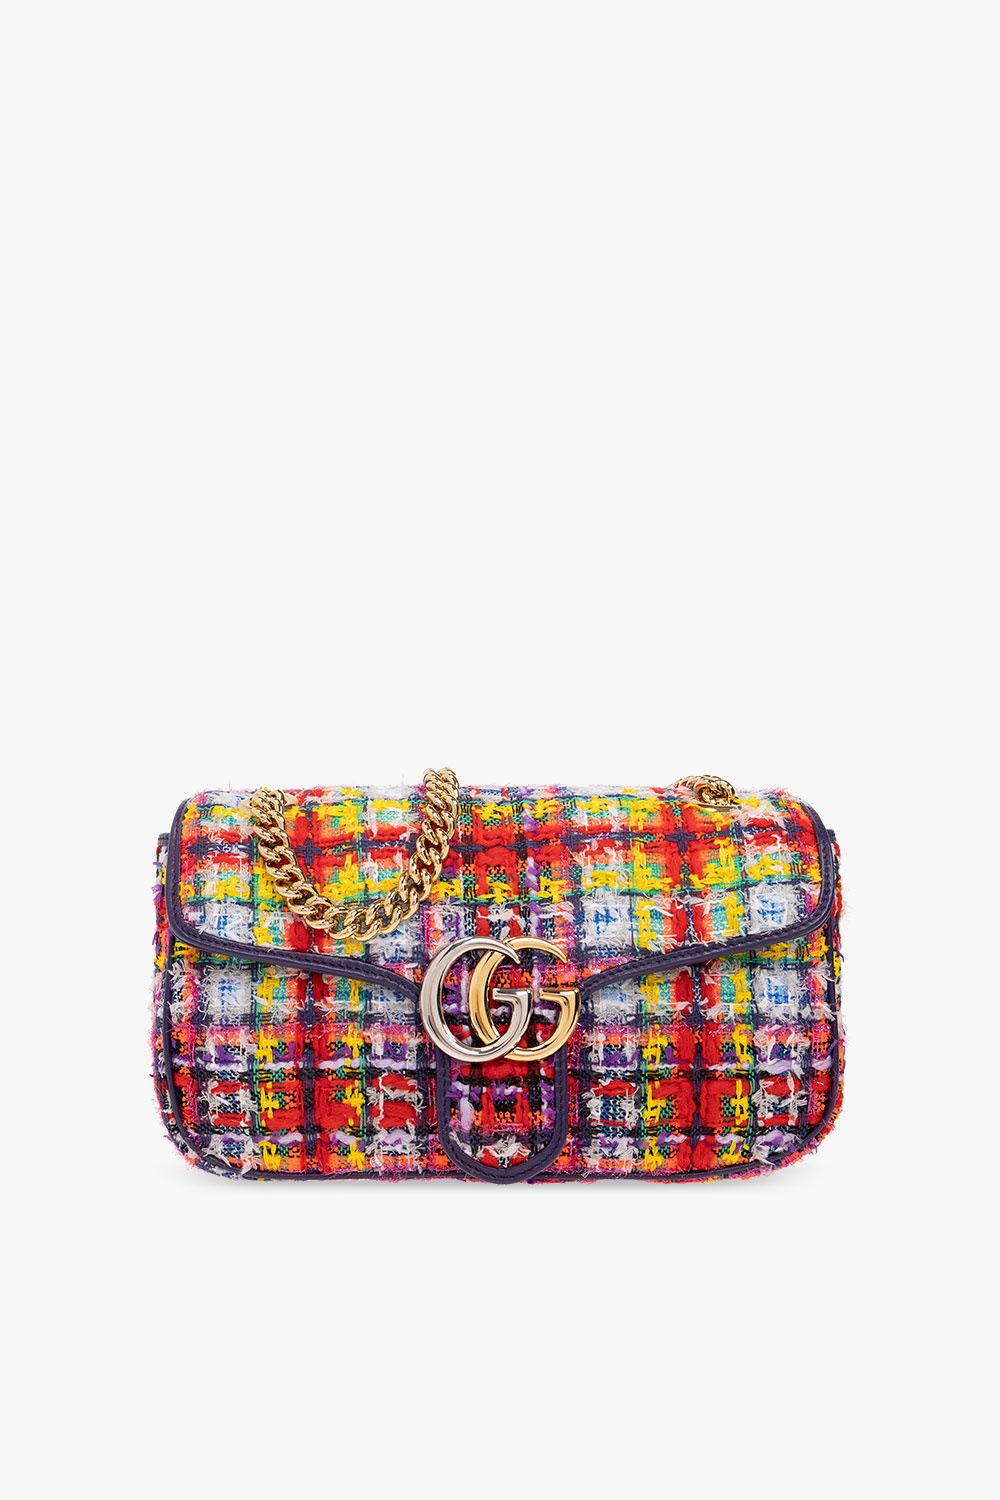 Gucci ‘GG Marmont 2.0’ tweed shoulder bag